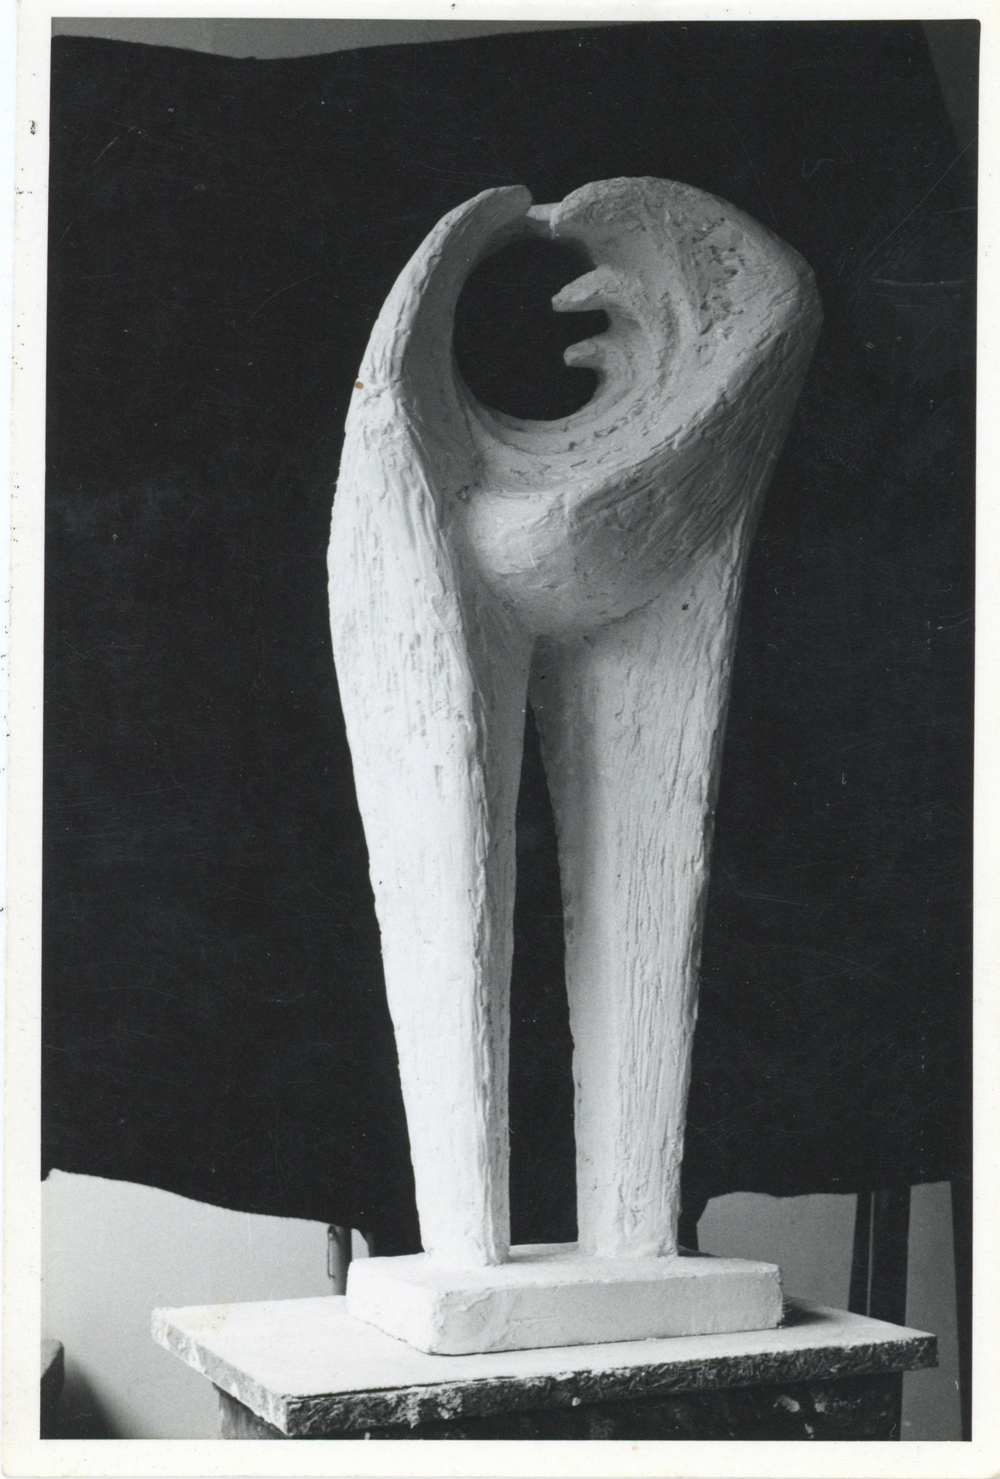 Krishna Reddy_Plaster sculpture Paris 1954_Archival print on paper_22inx 17in_Ed of 5 +AP_2016